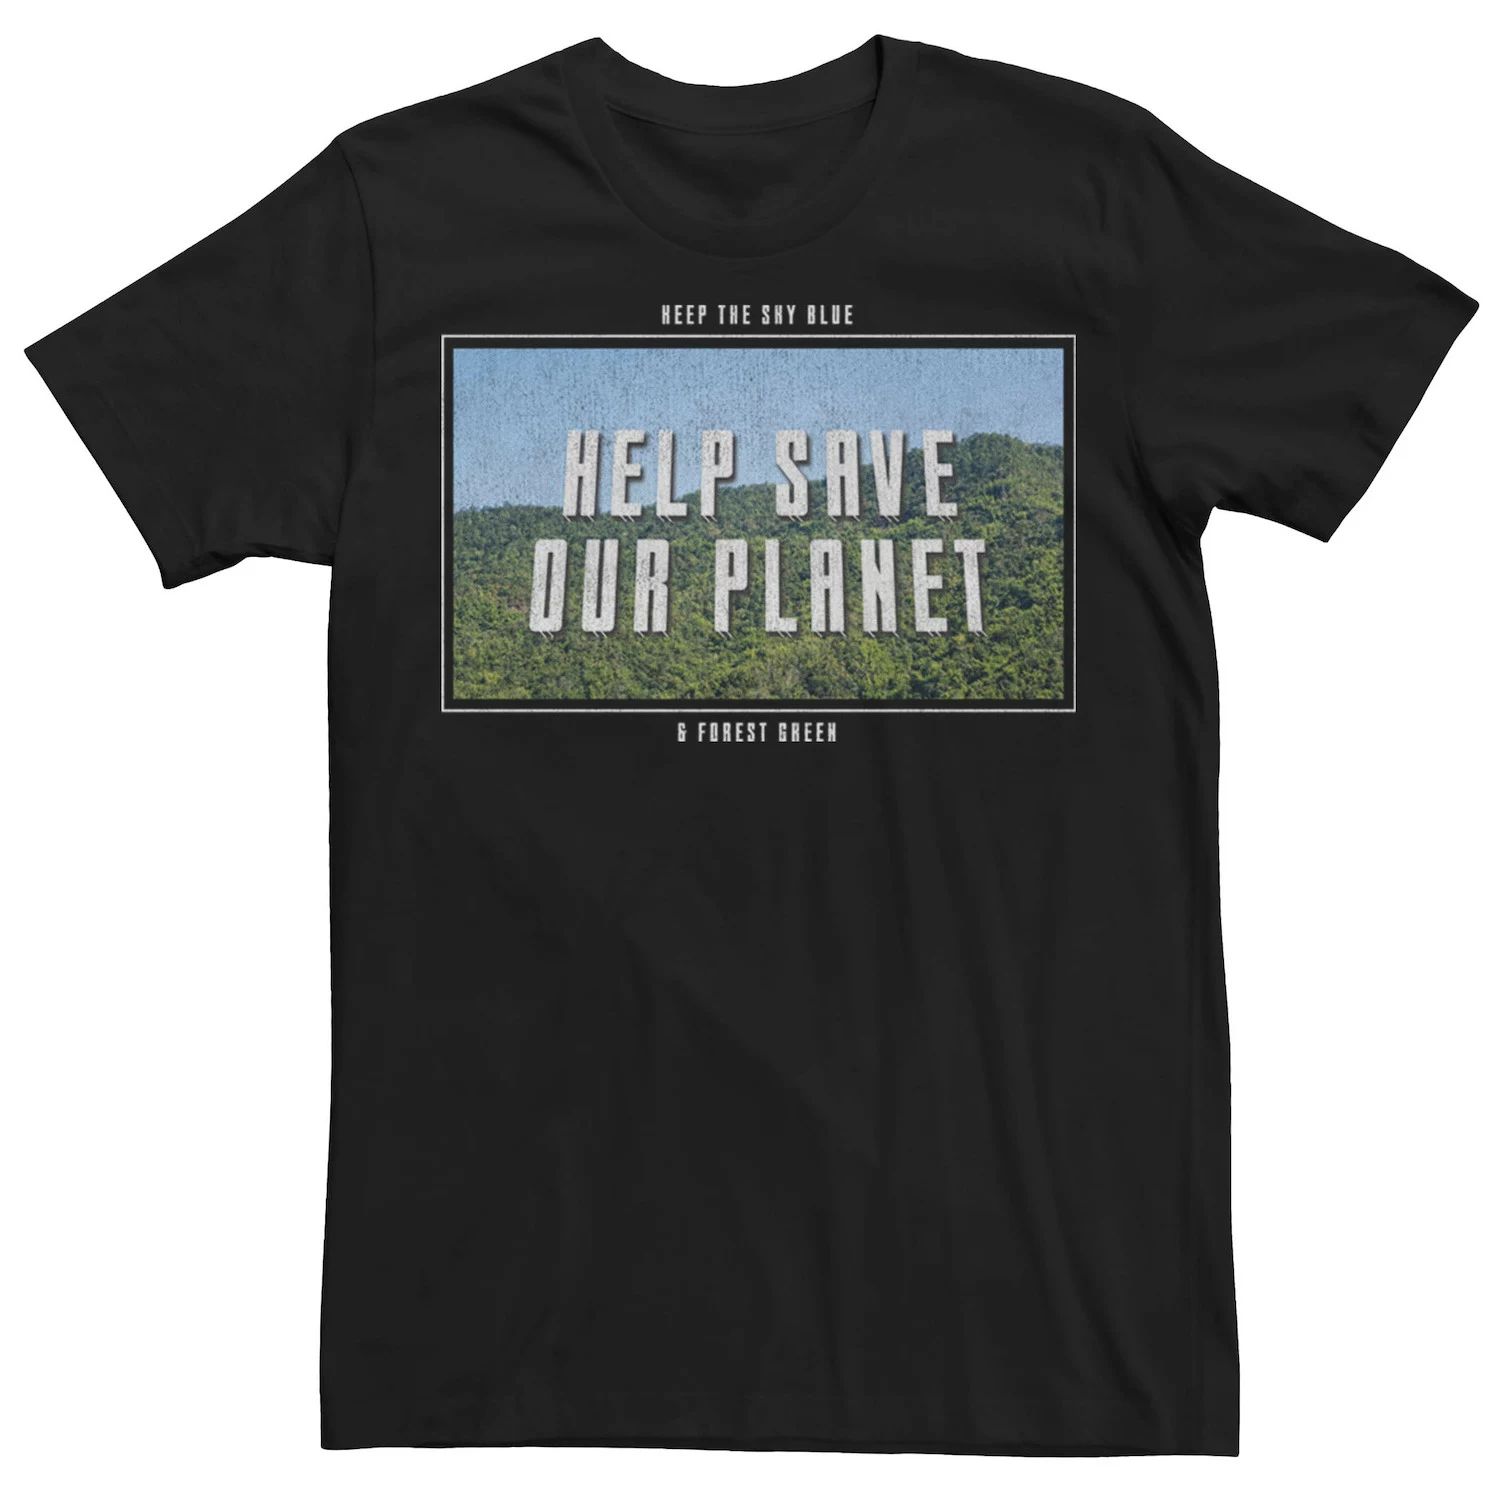 Мужская футболка с портретом ко Дню Земли «Помогите спасти нашу планету» Licensed Character